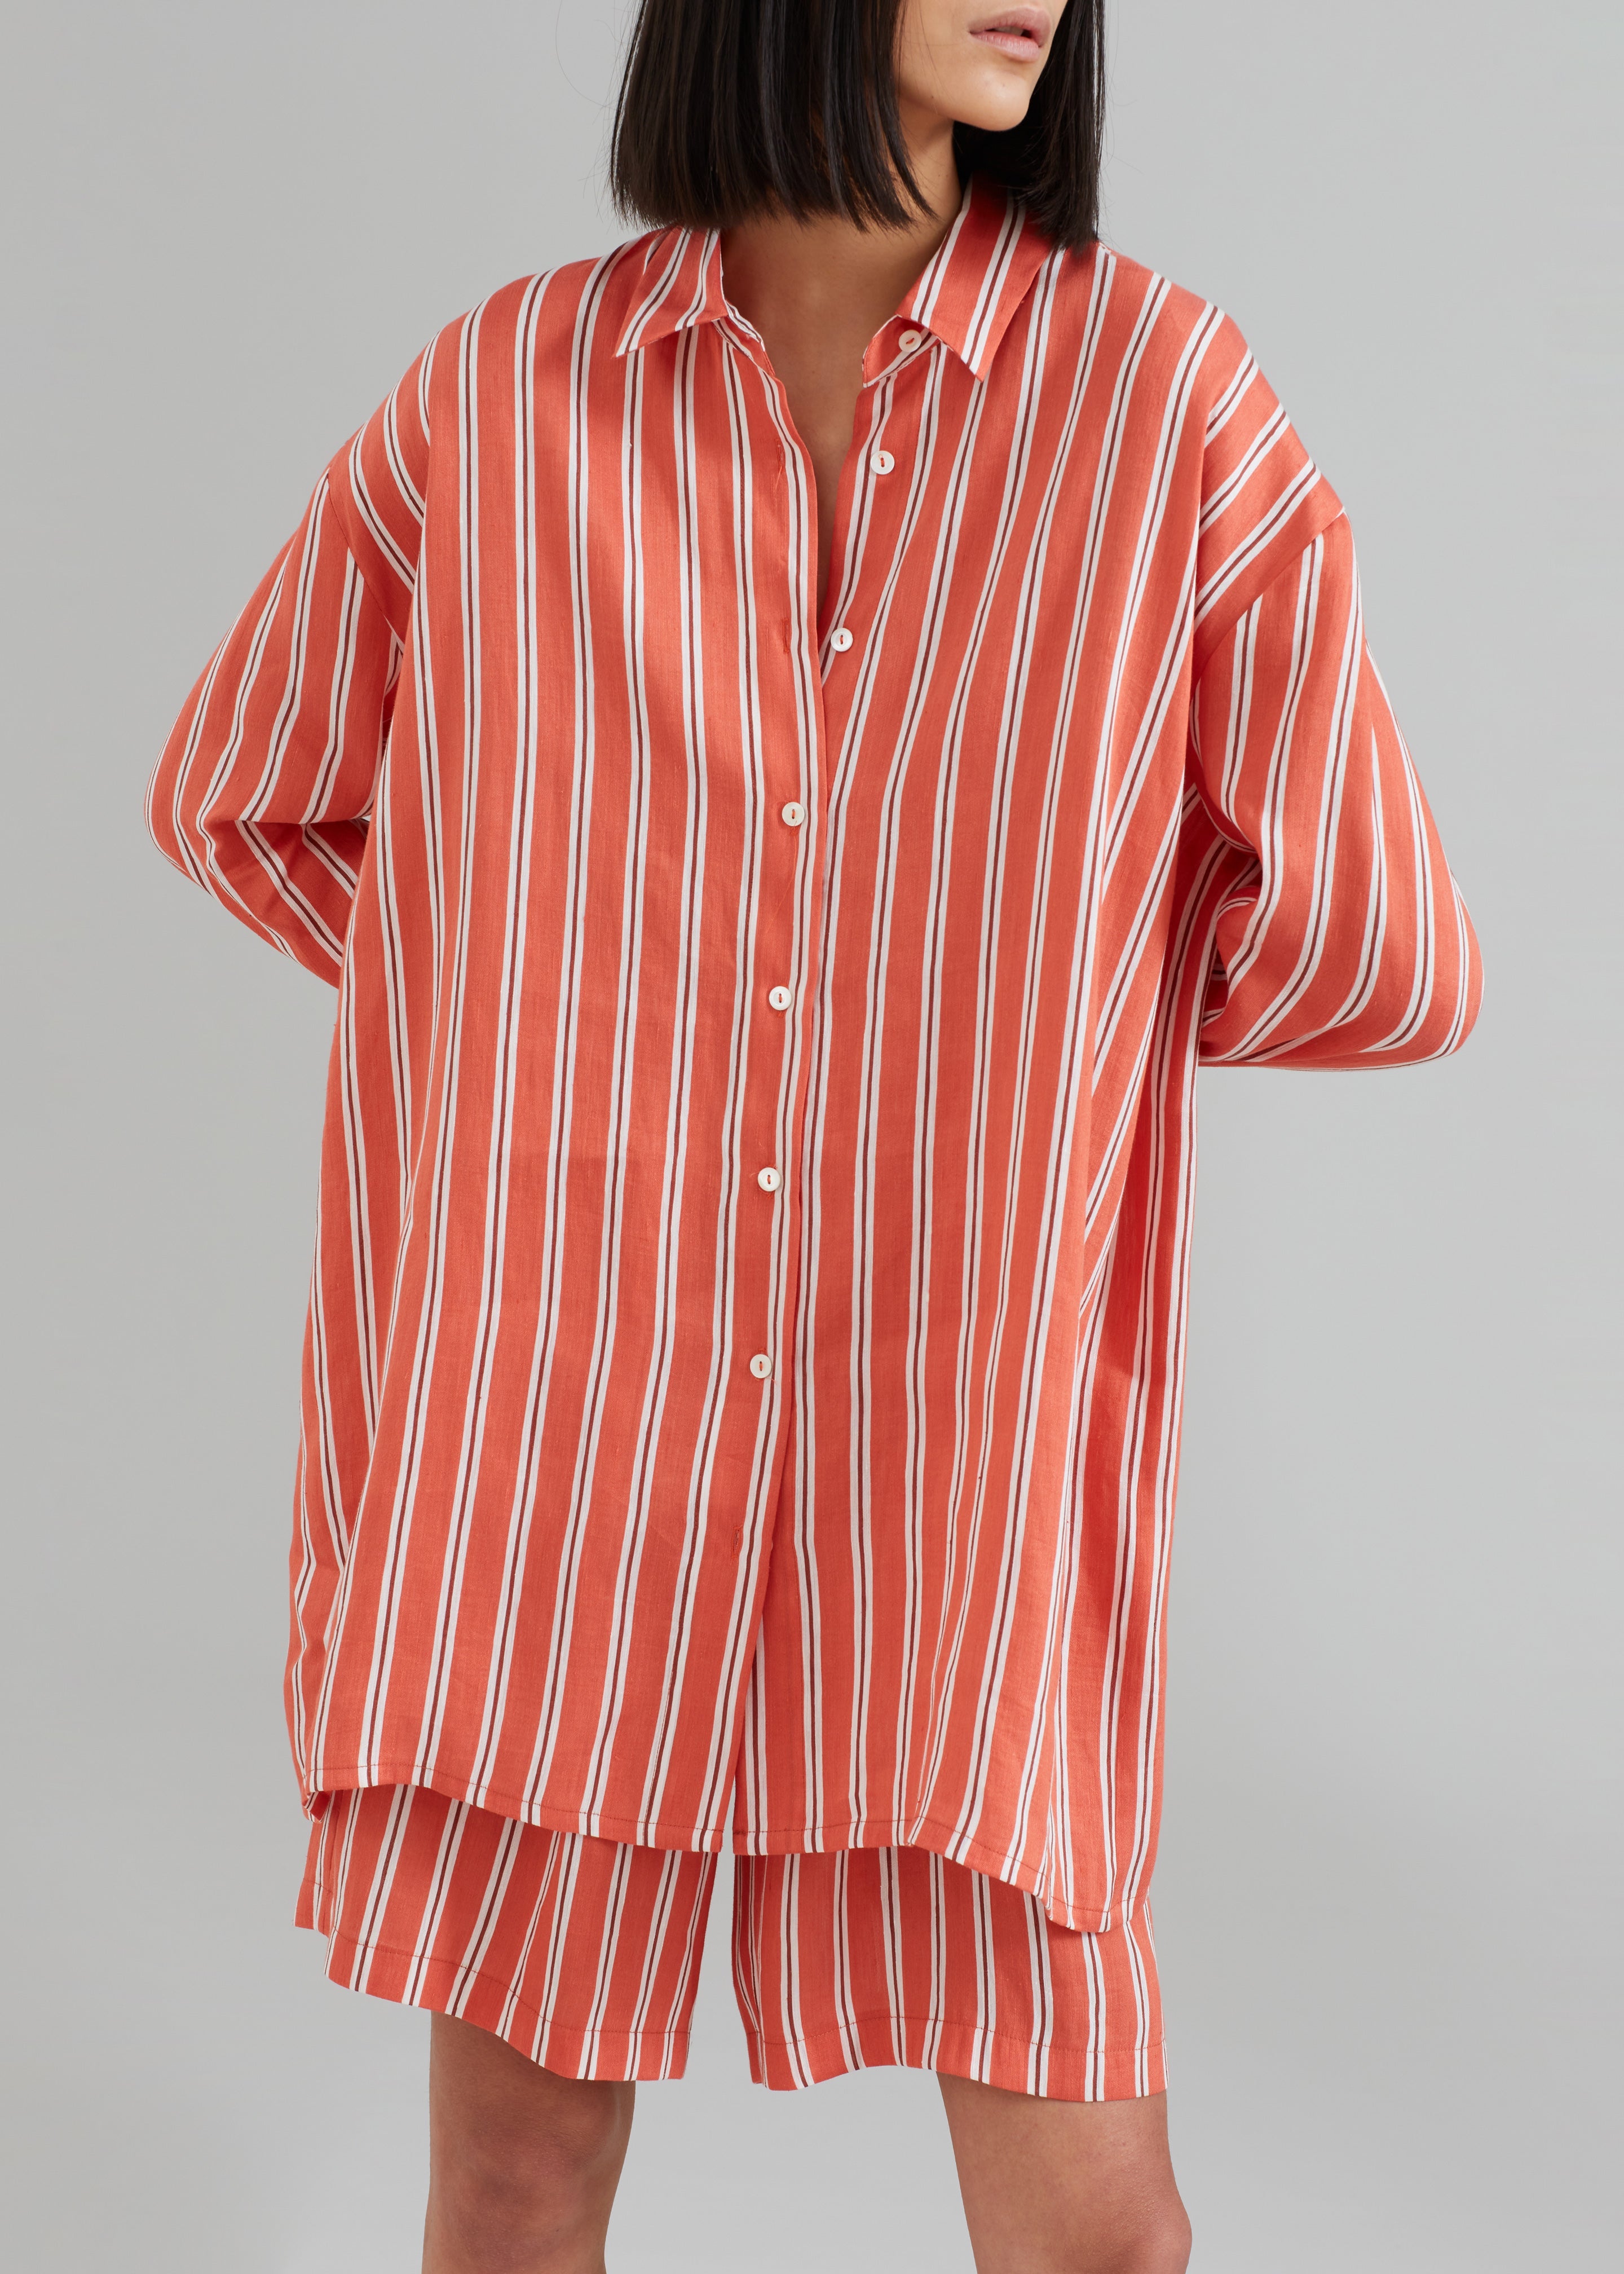 MATIN Isola Stripe Shirt - Red Stripe - 3